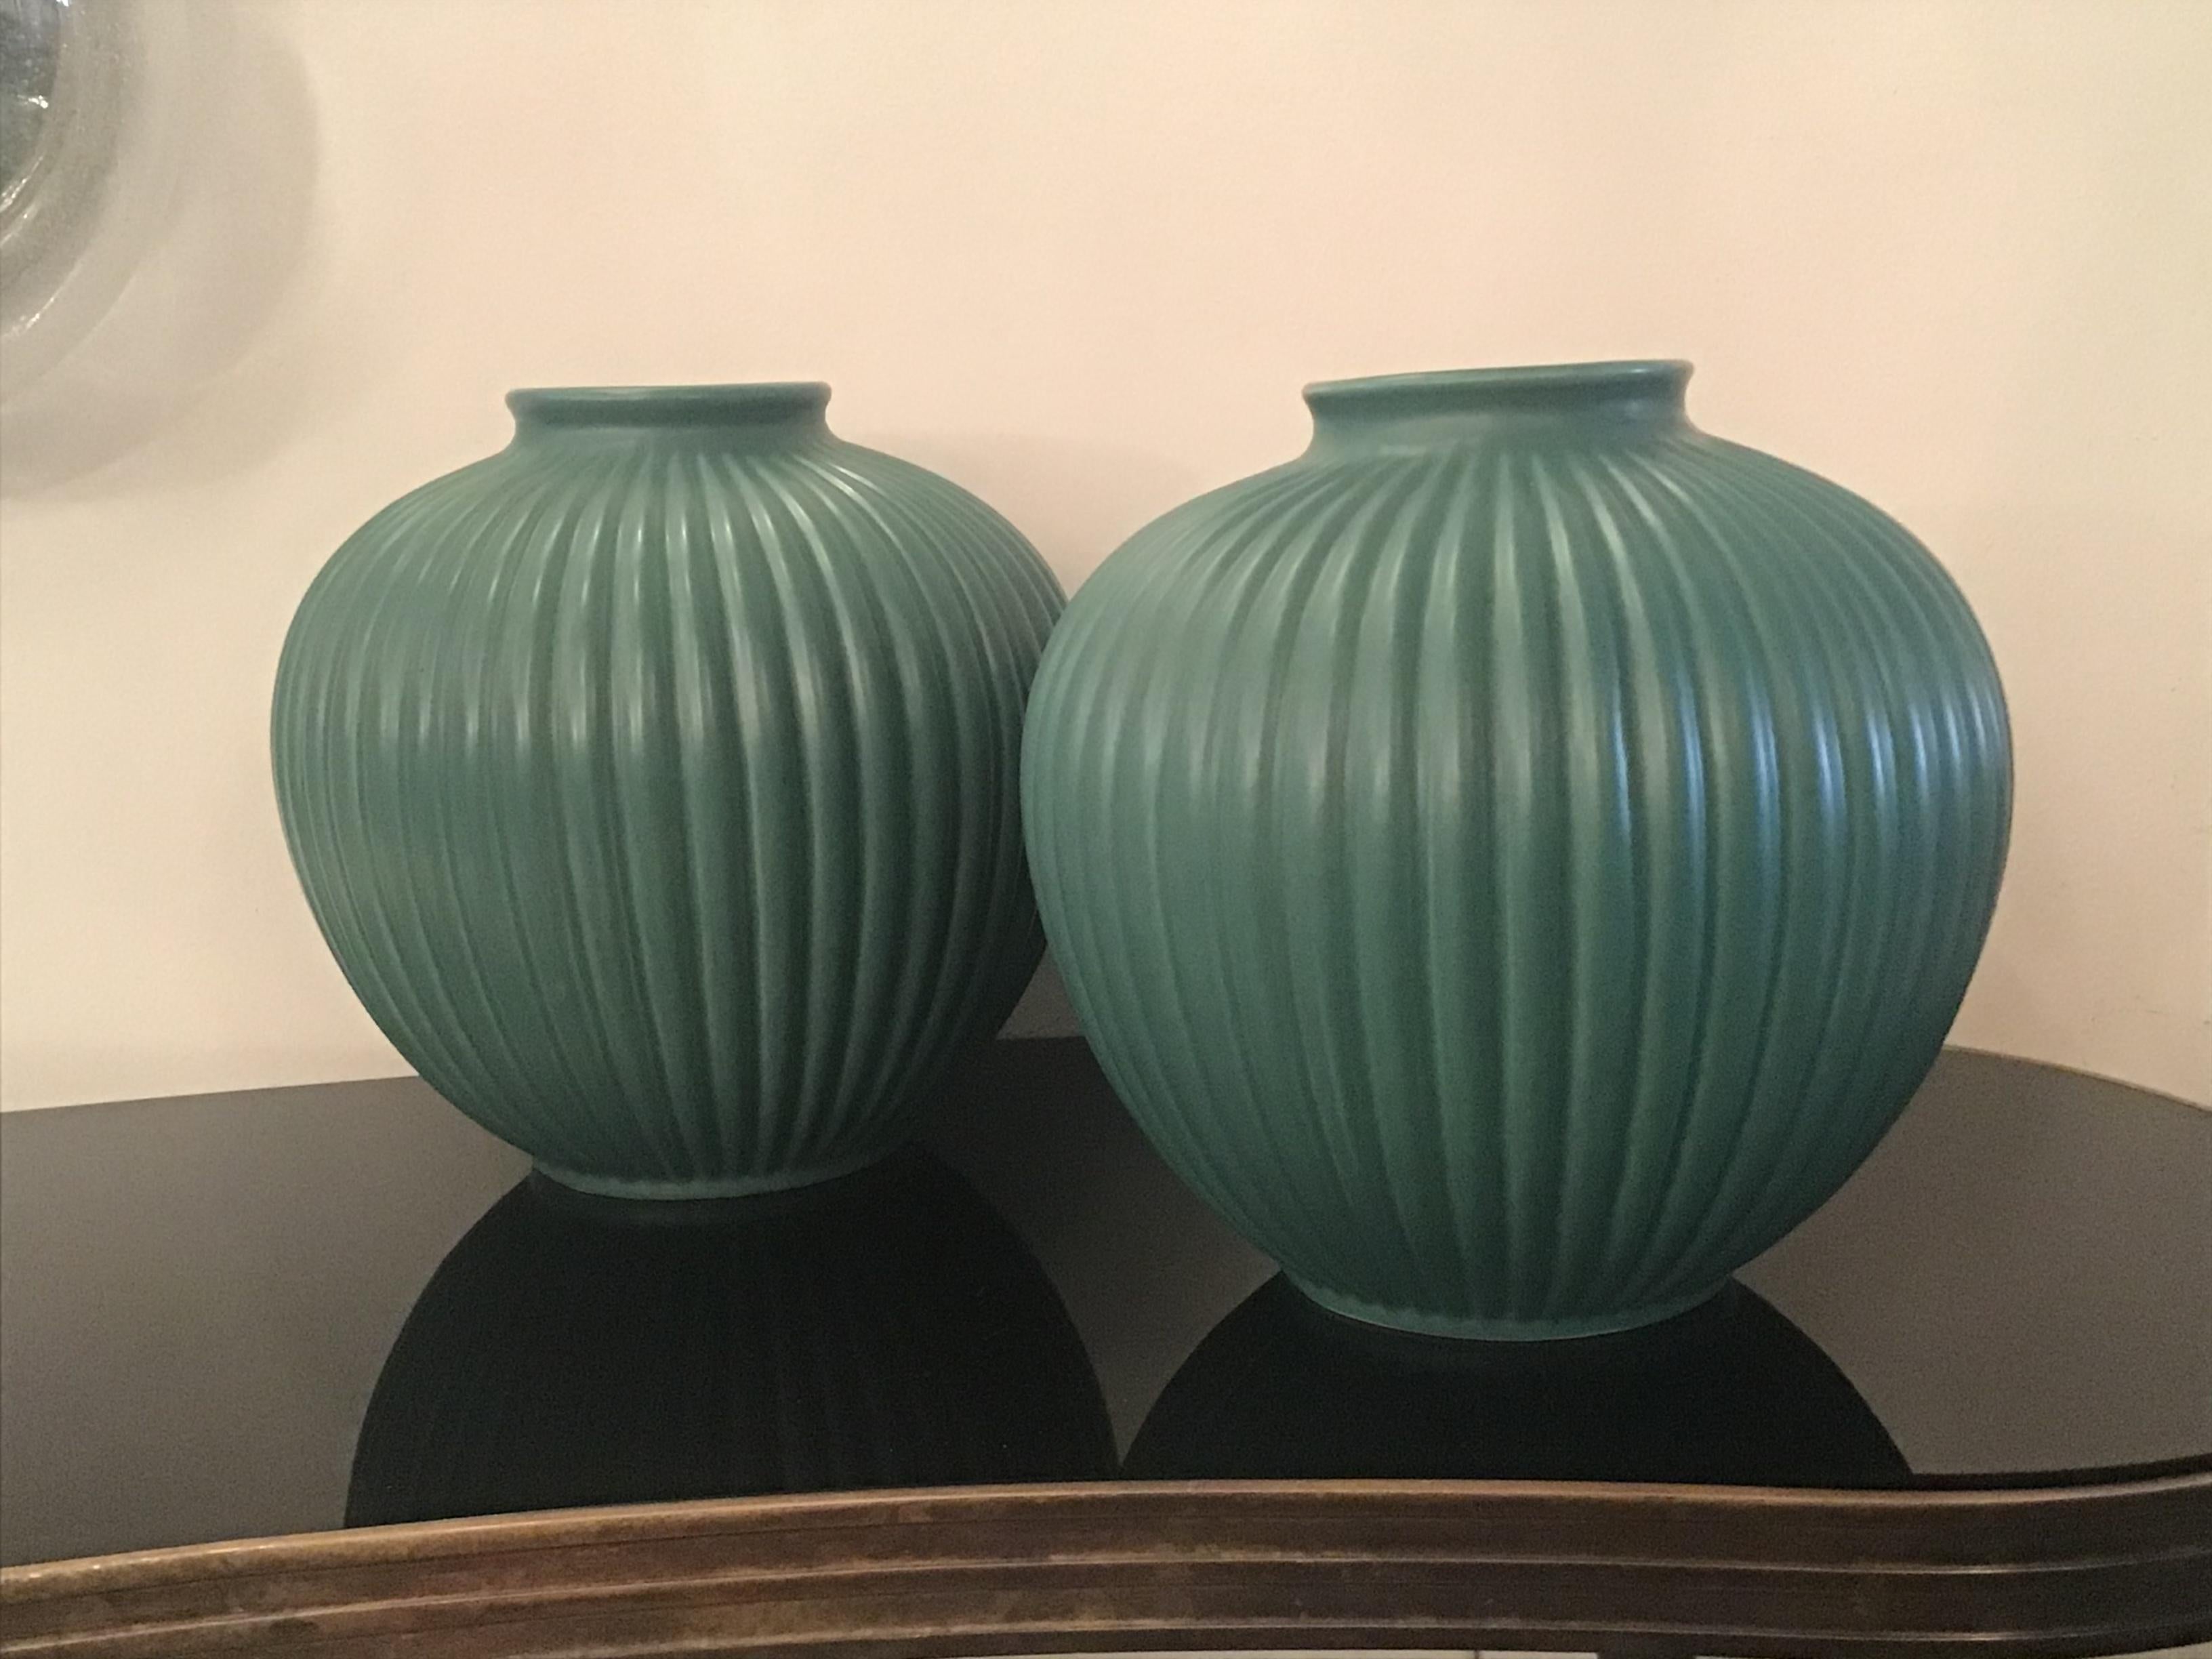 Richard Ginori Giovanni Gariboldi Pair of Vases Green Ceramic 1950 Italy For Sale 4